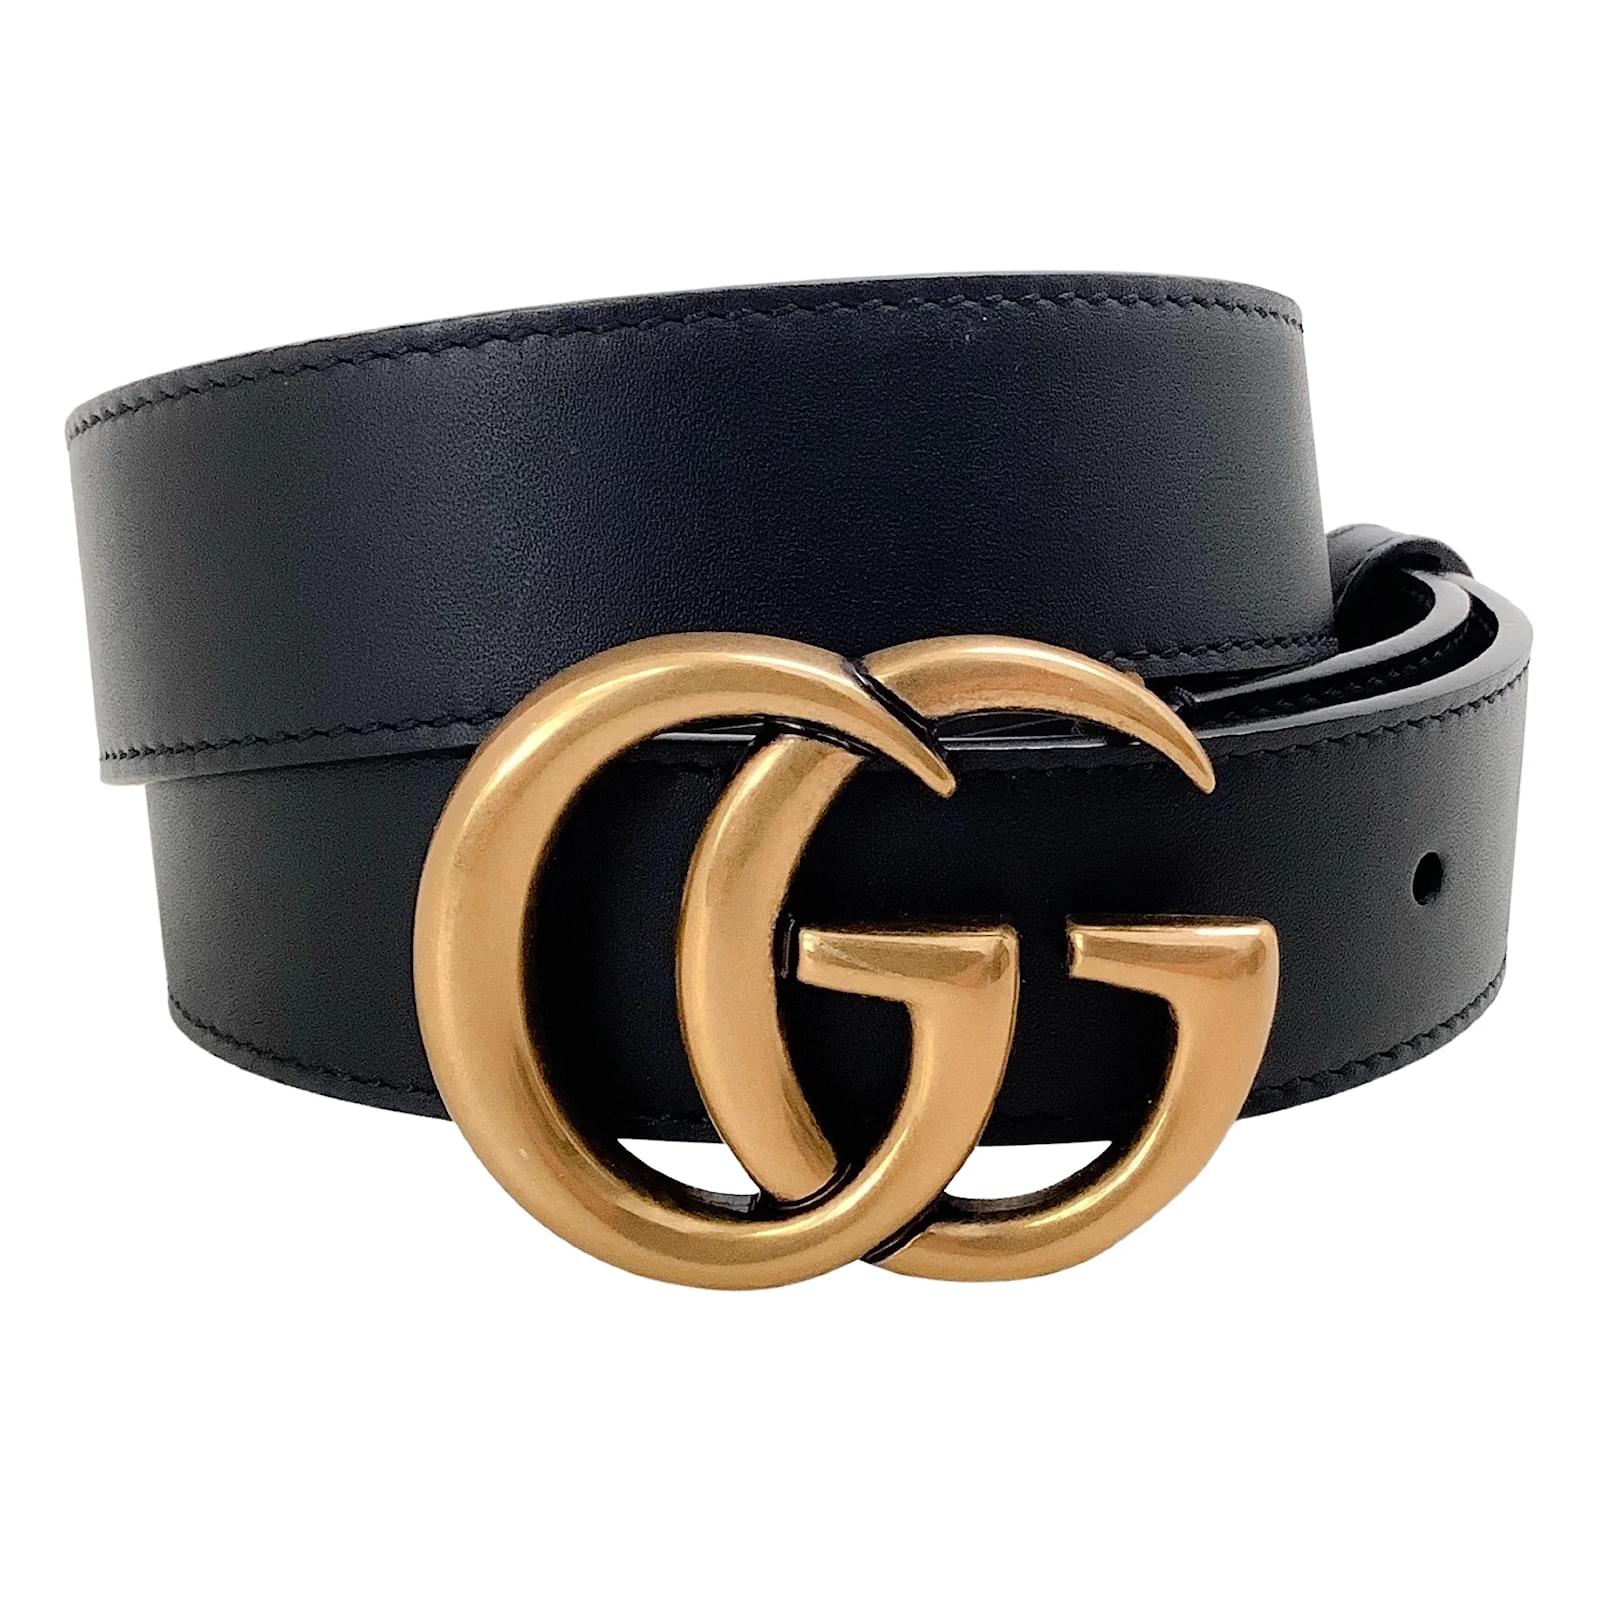 Black GG-logo leather belt, Gucci